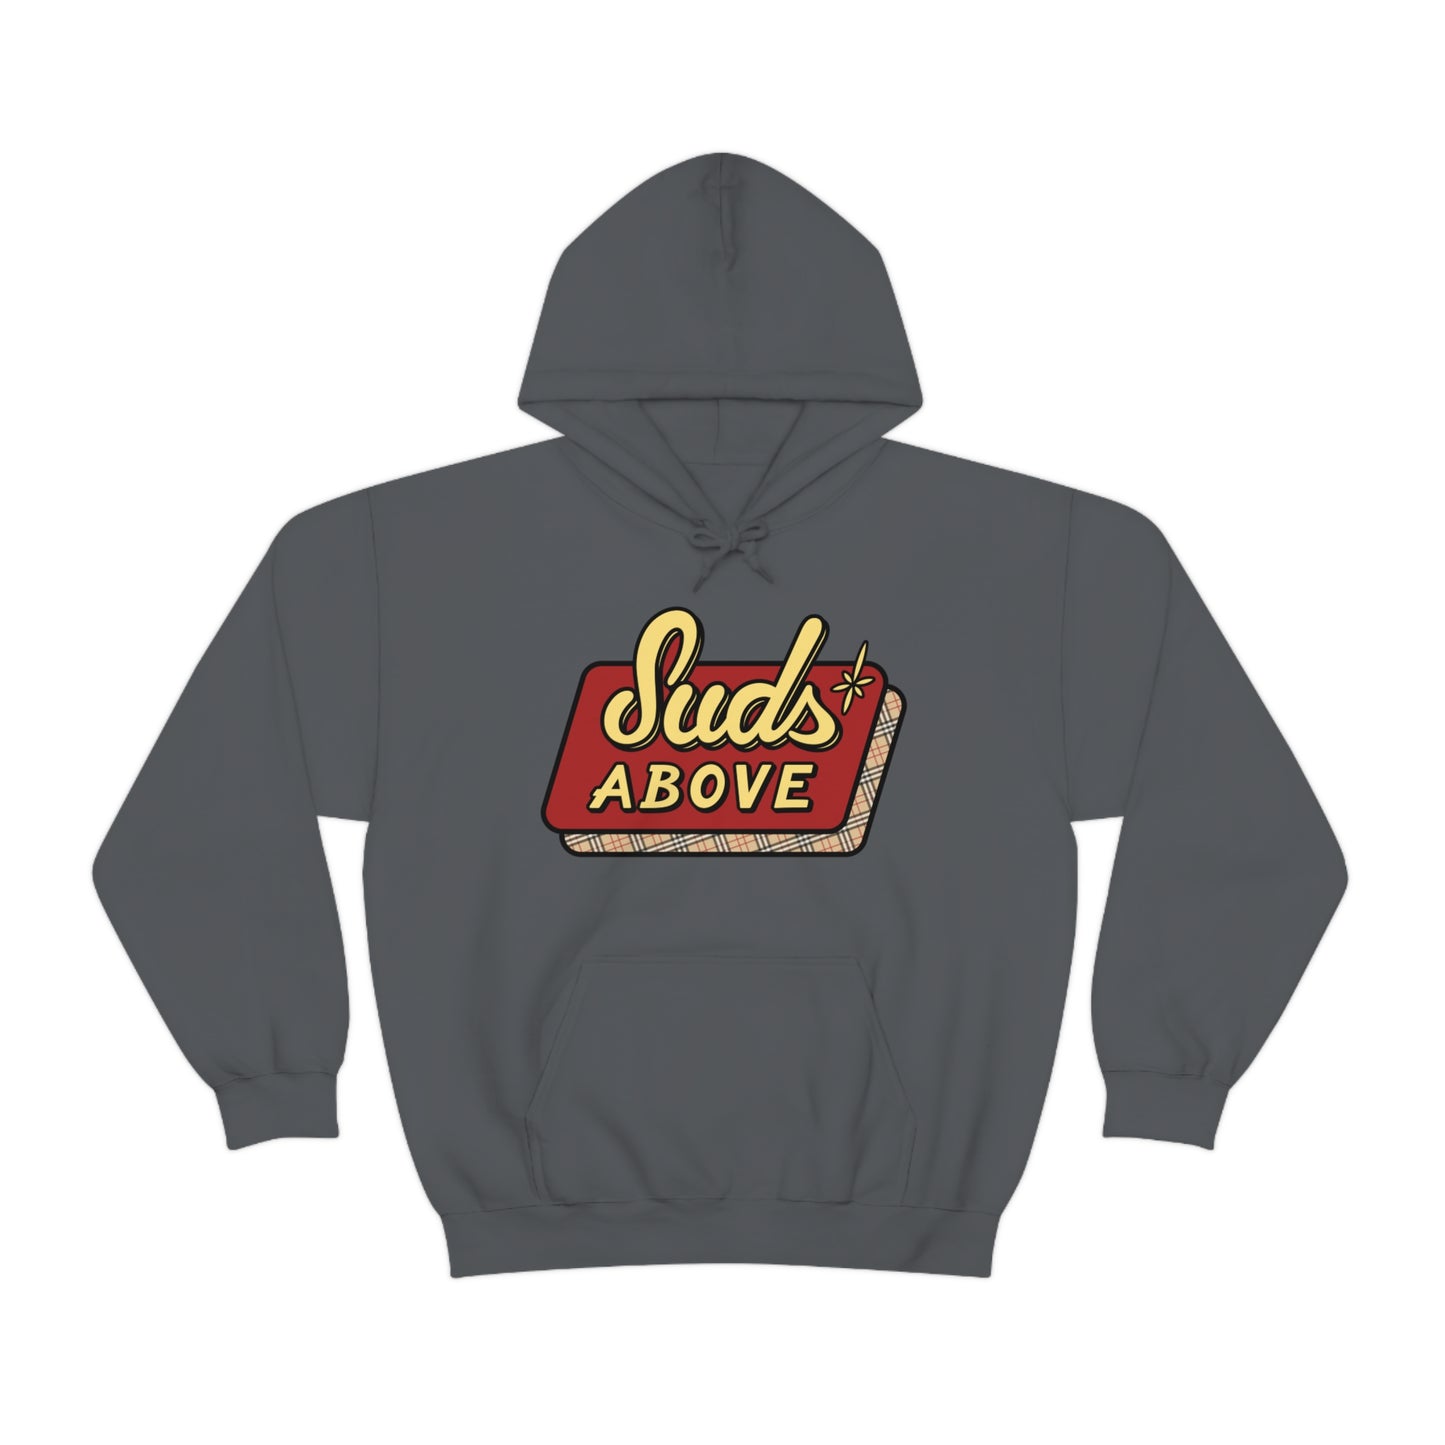 Suds Above Logo Hoodie - English Plaid